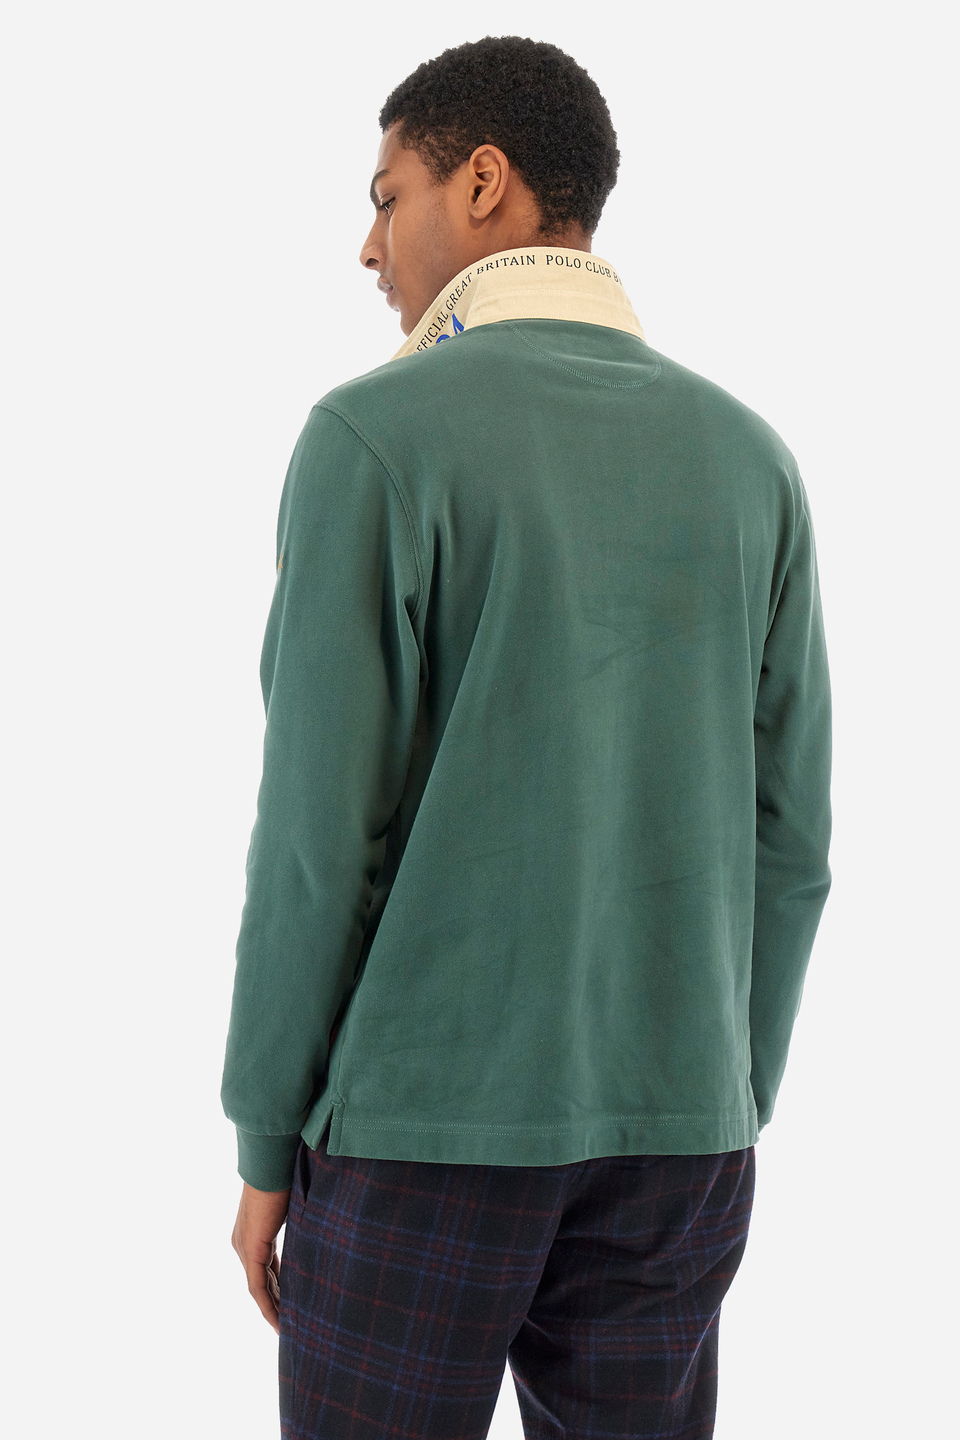 Man polo shirt in regular fit - Waldemar | La Martina - Official Online Shop